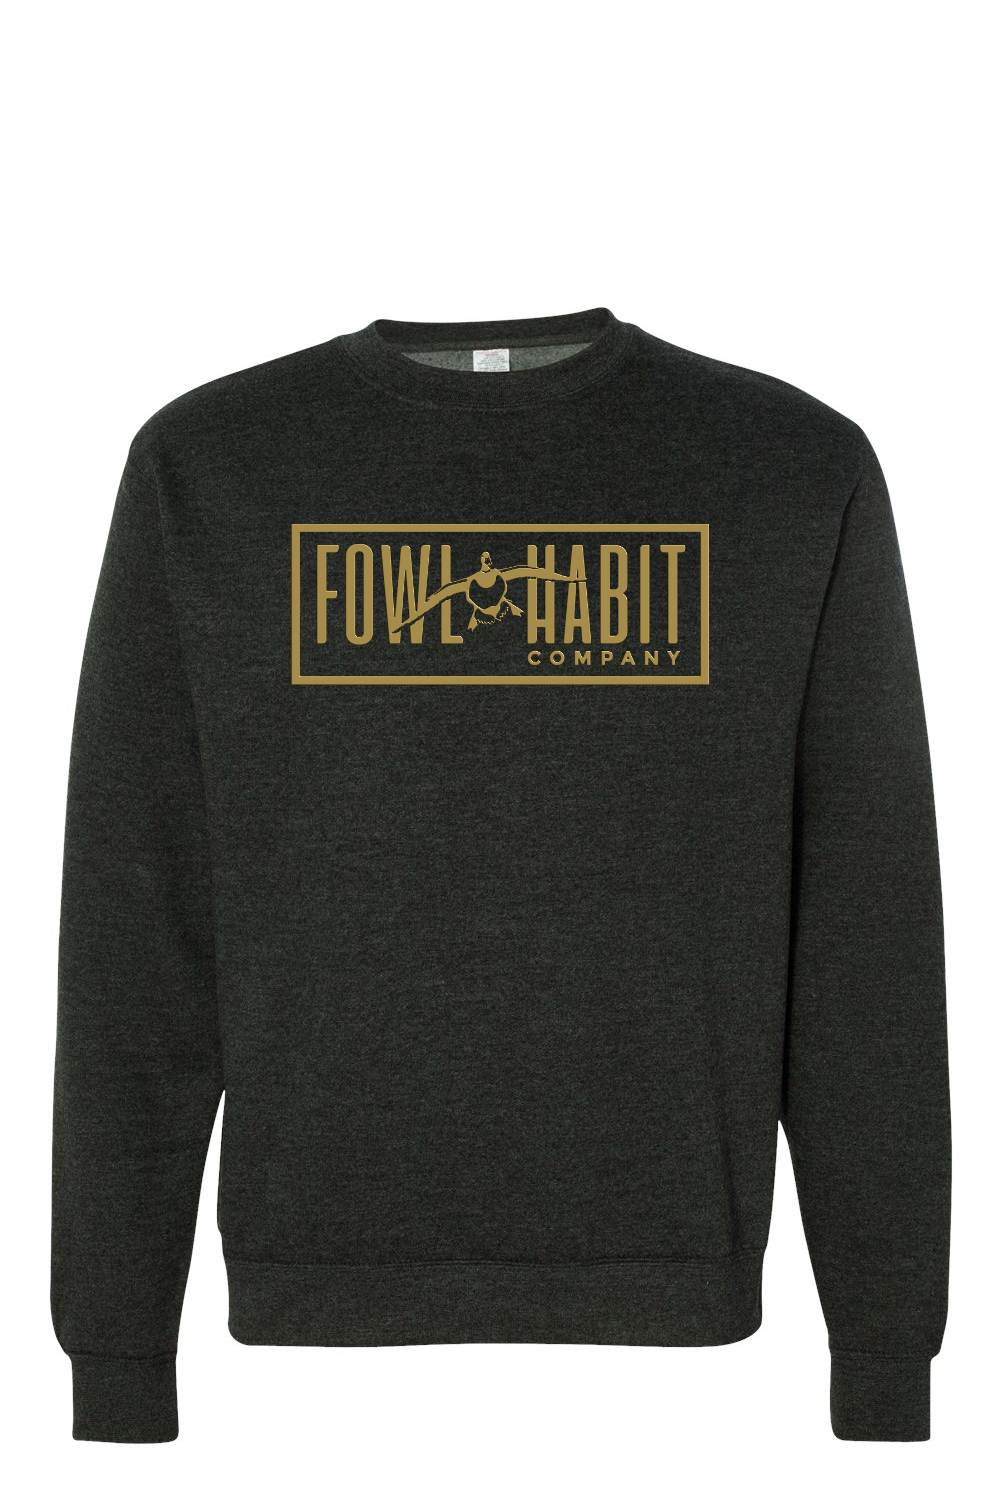 Cupped Up Sweatshirt - Fowl Habit Co.